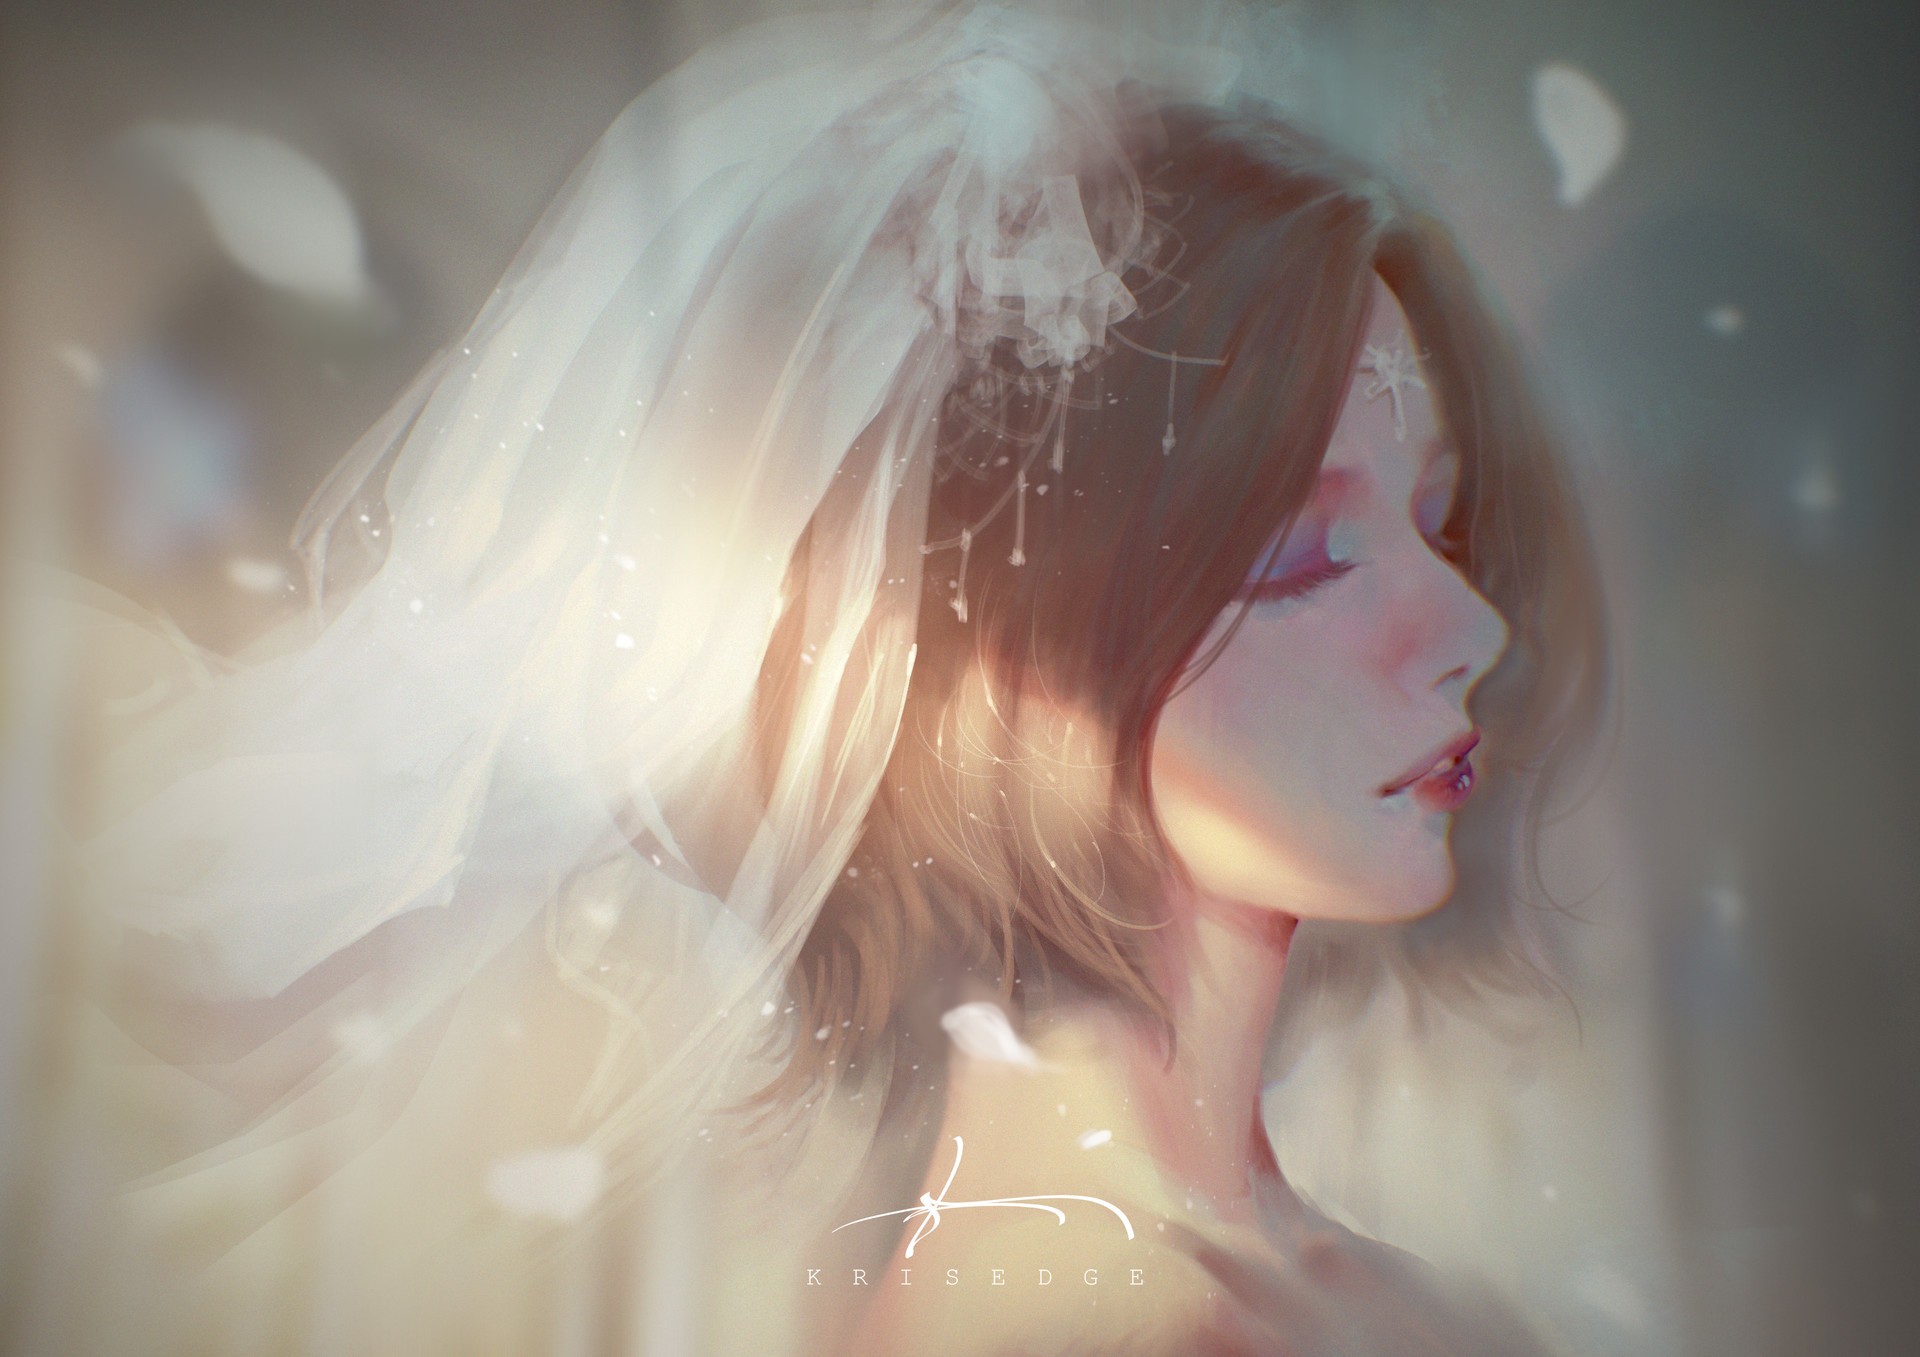 Sad Bride by Krisedge